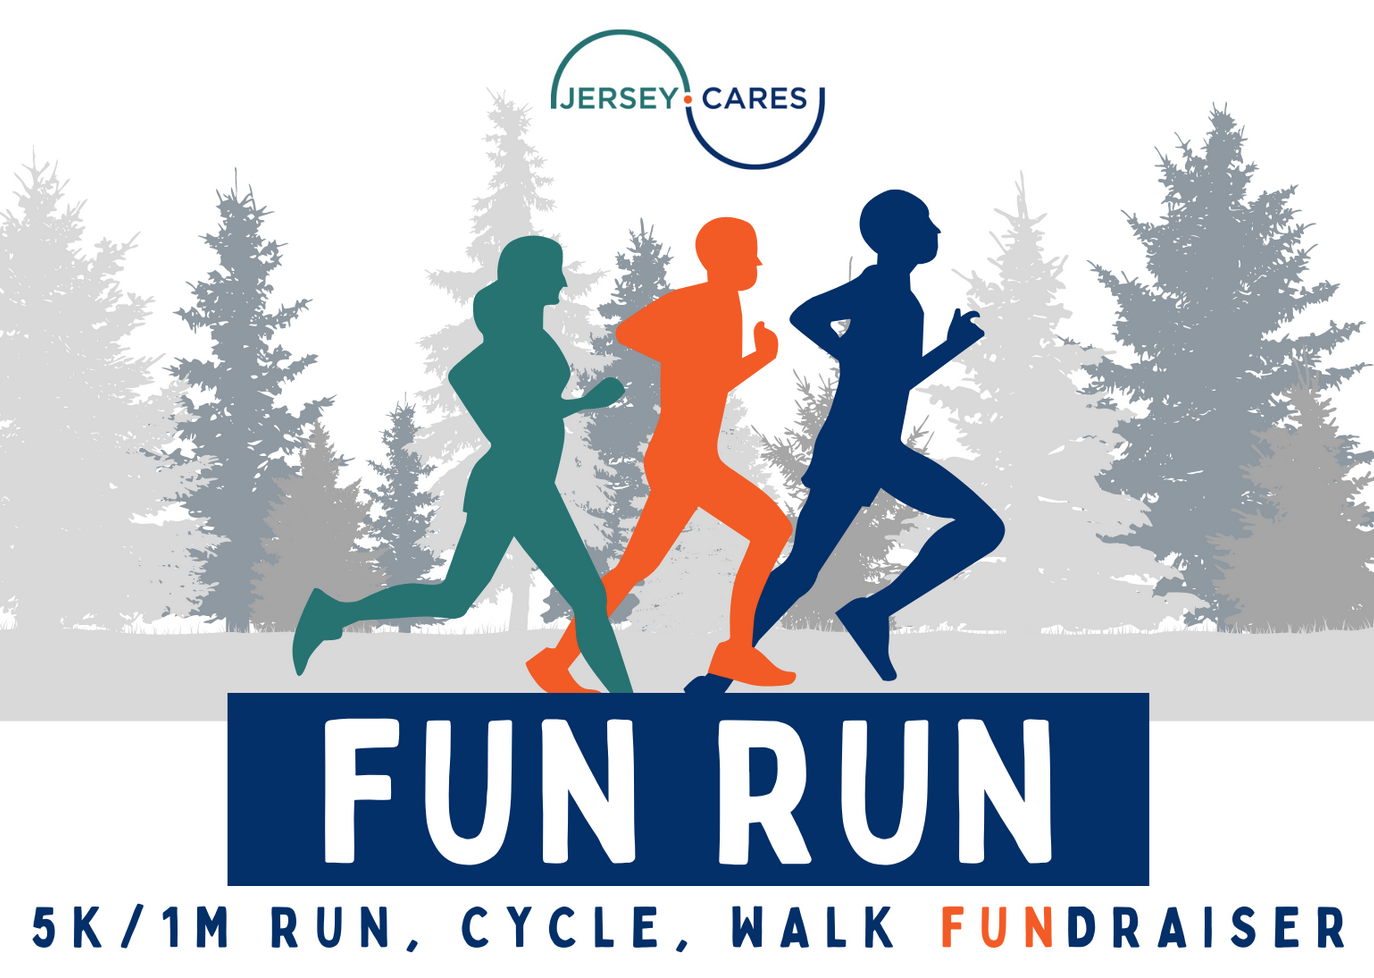 Jersey Cares Fun Run logo on RaceRaves